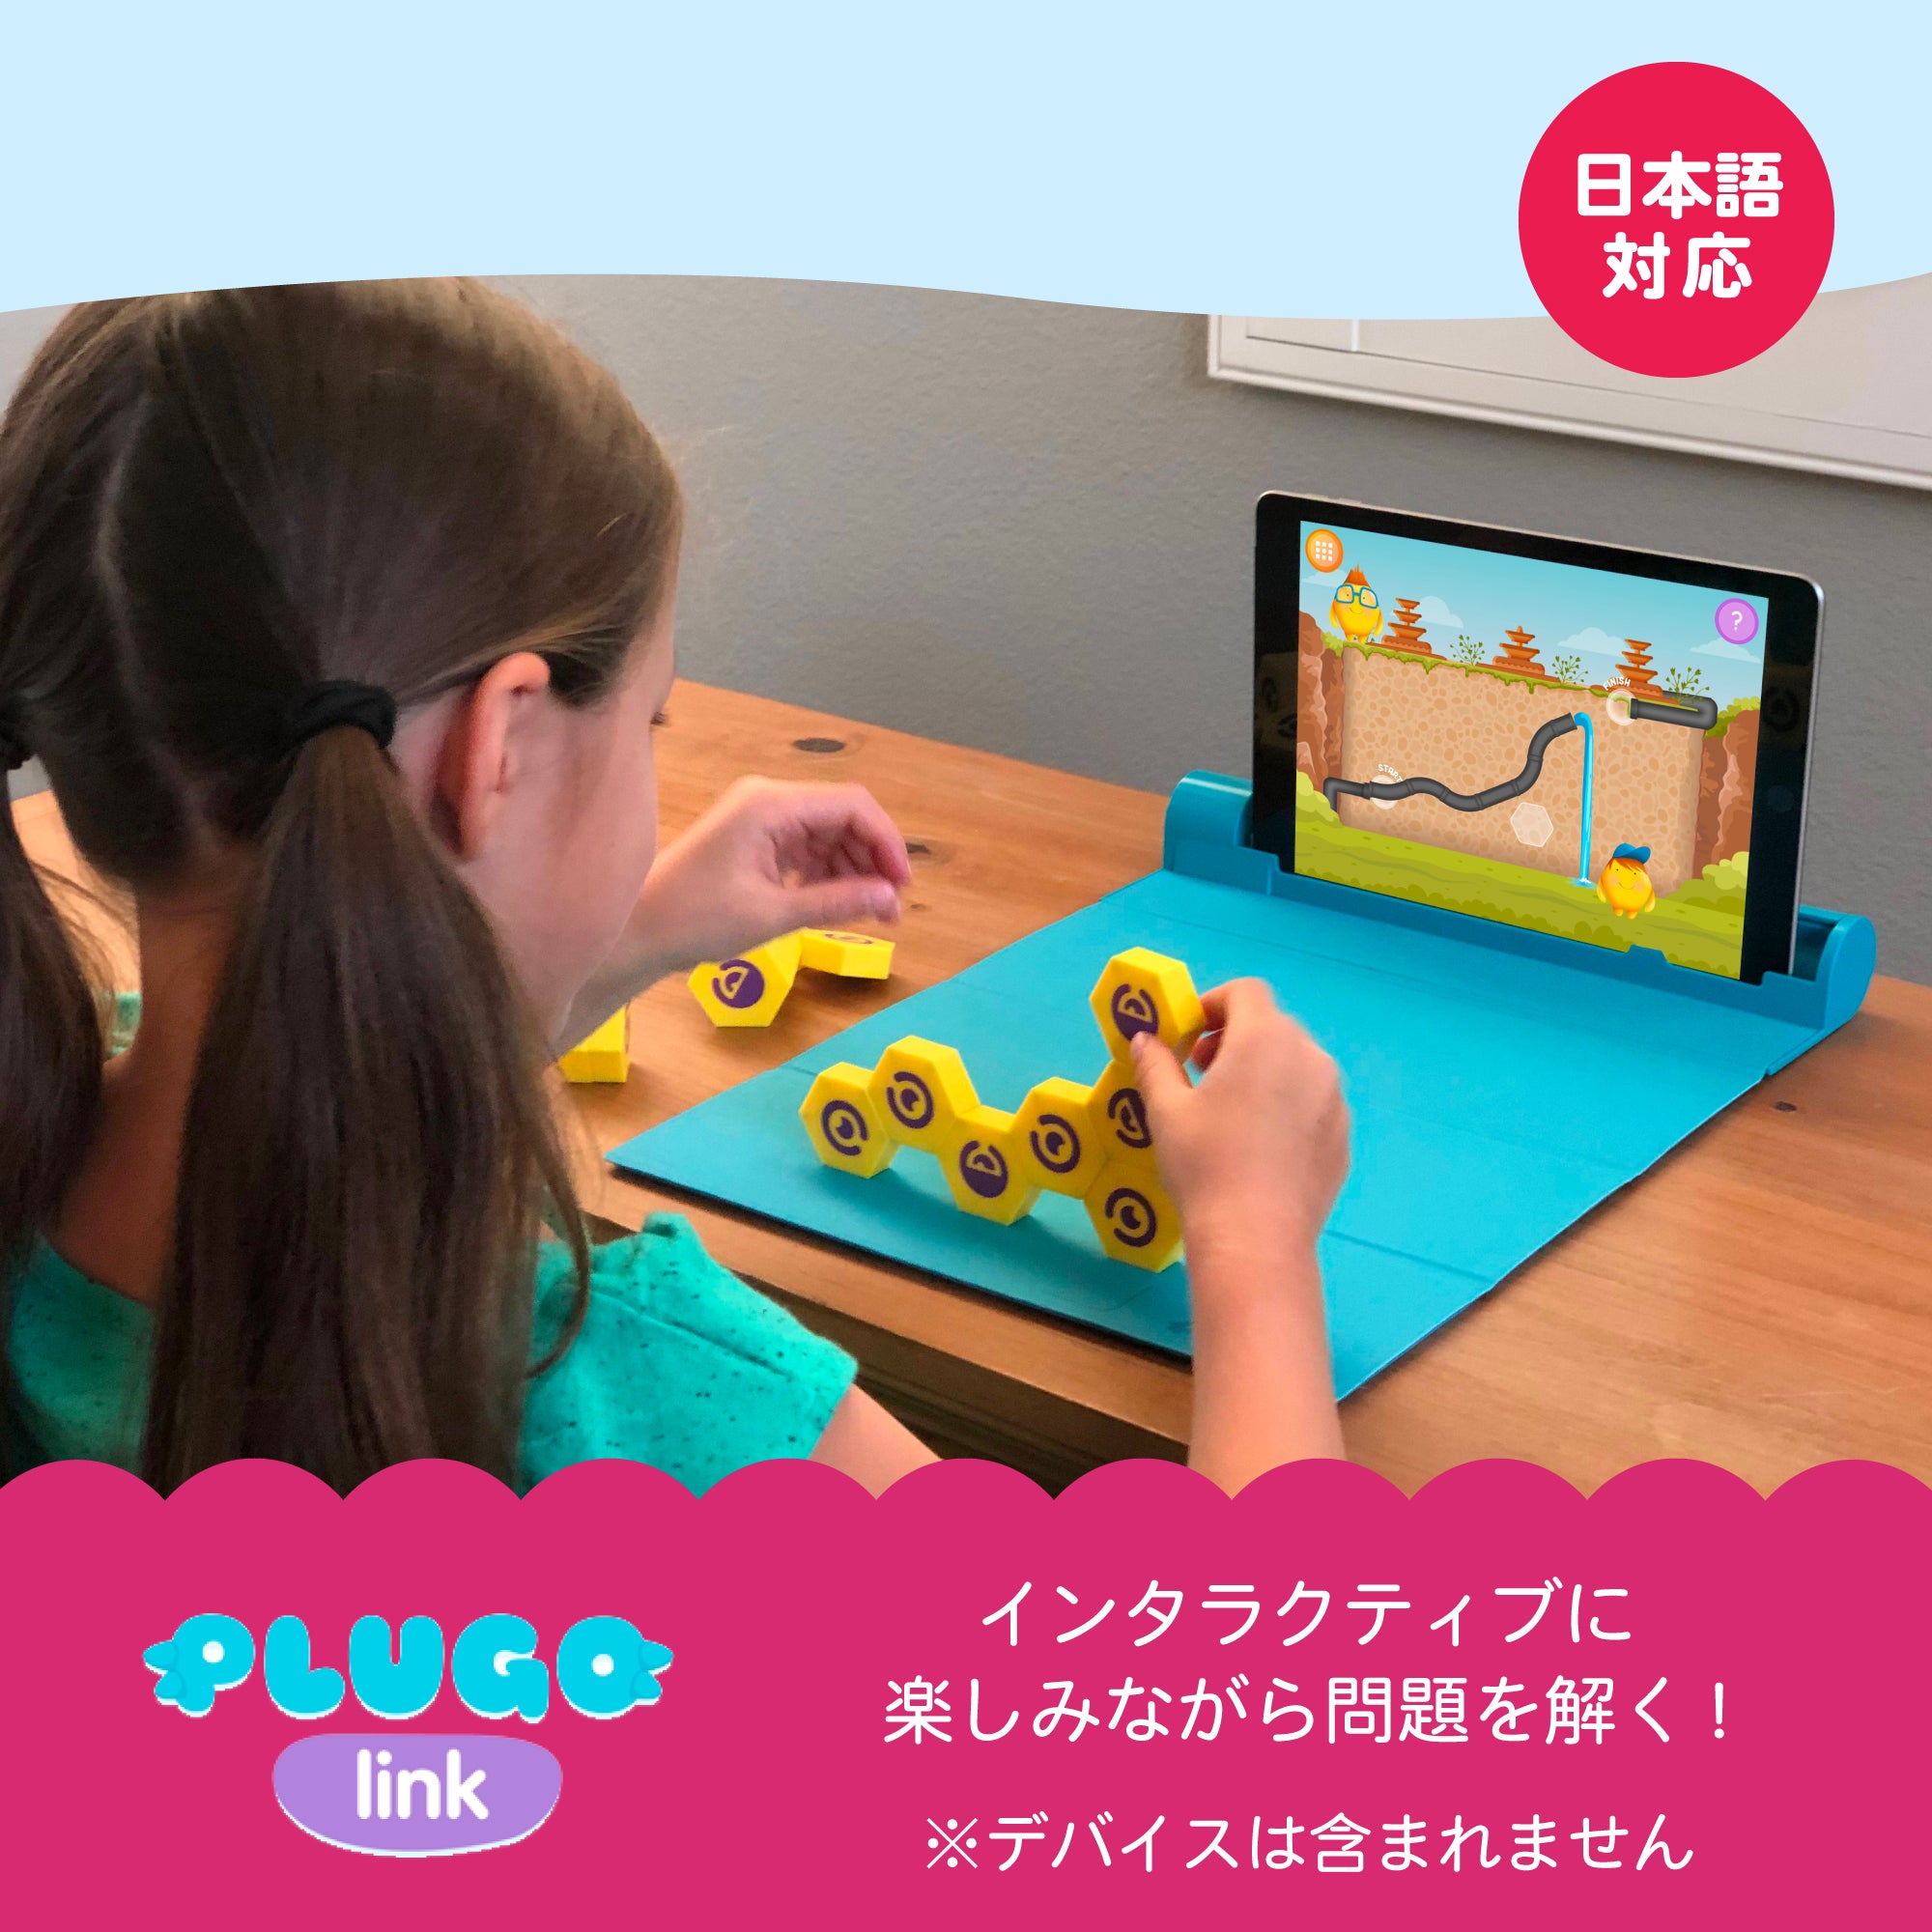 Plugo Link – Playshifu Japan